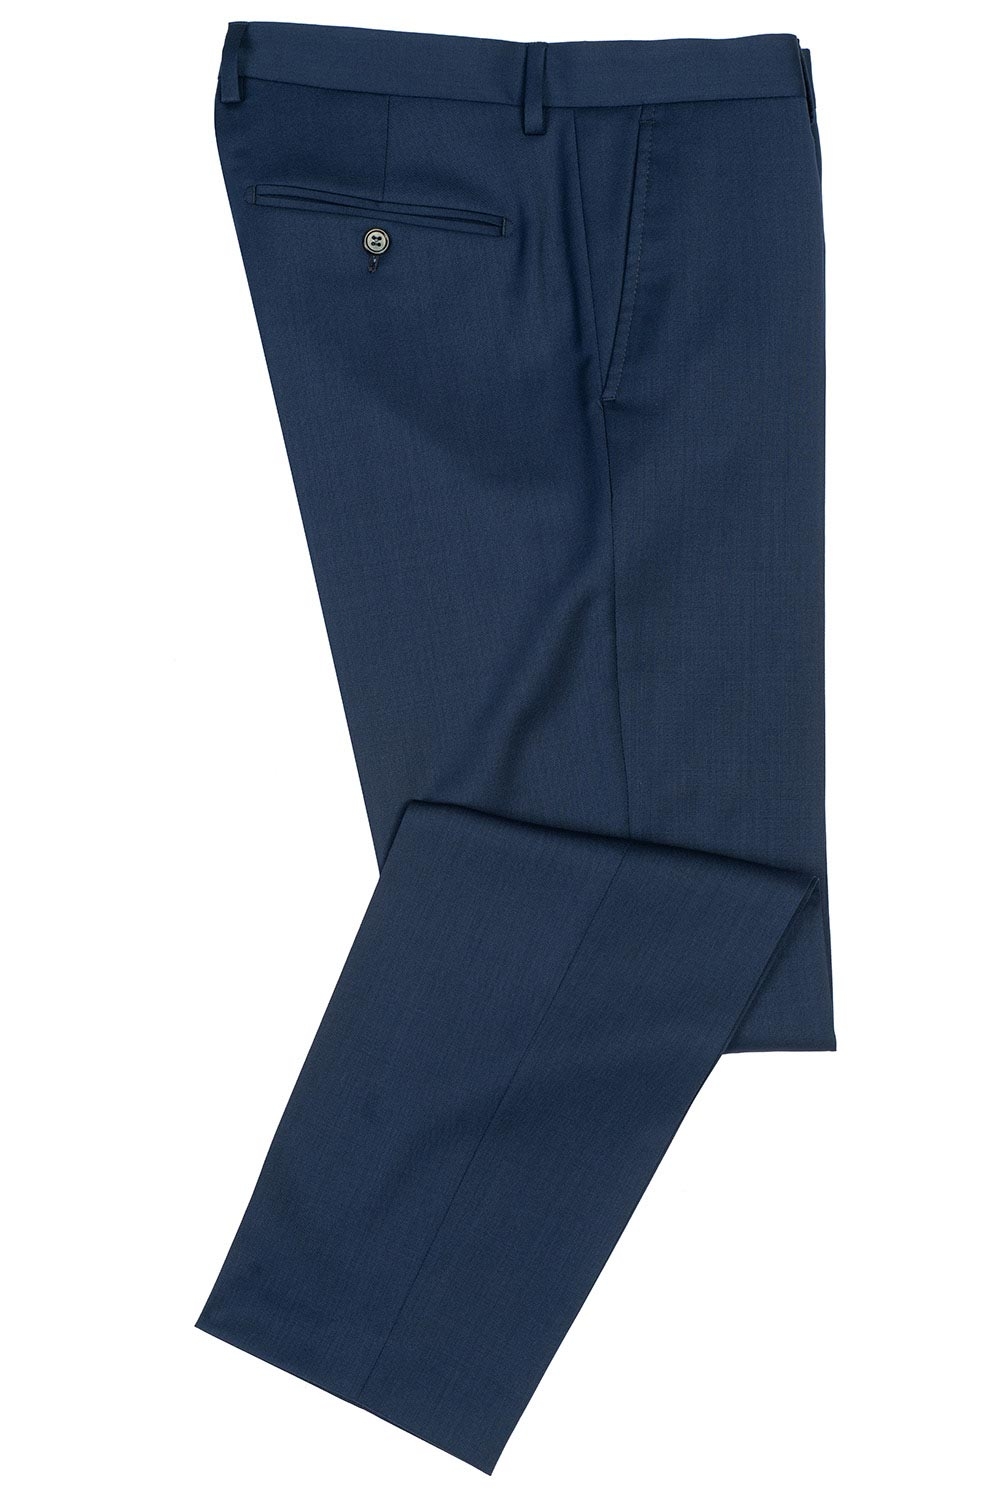 Pantaloni slim conti albastri uni 0